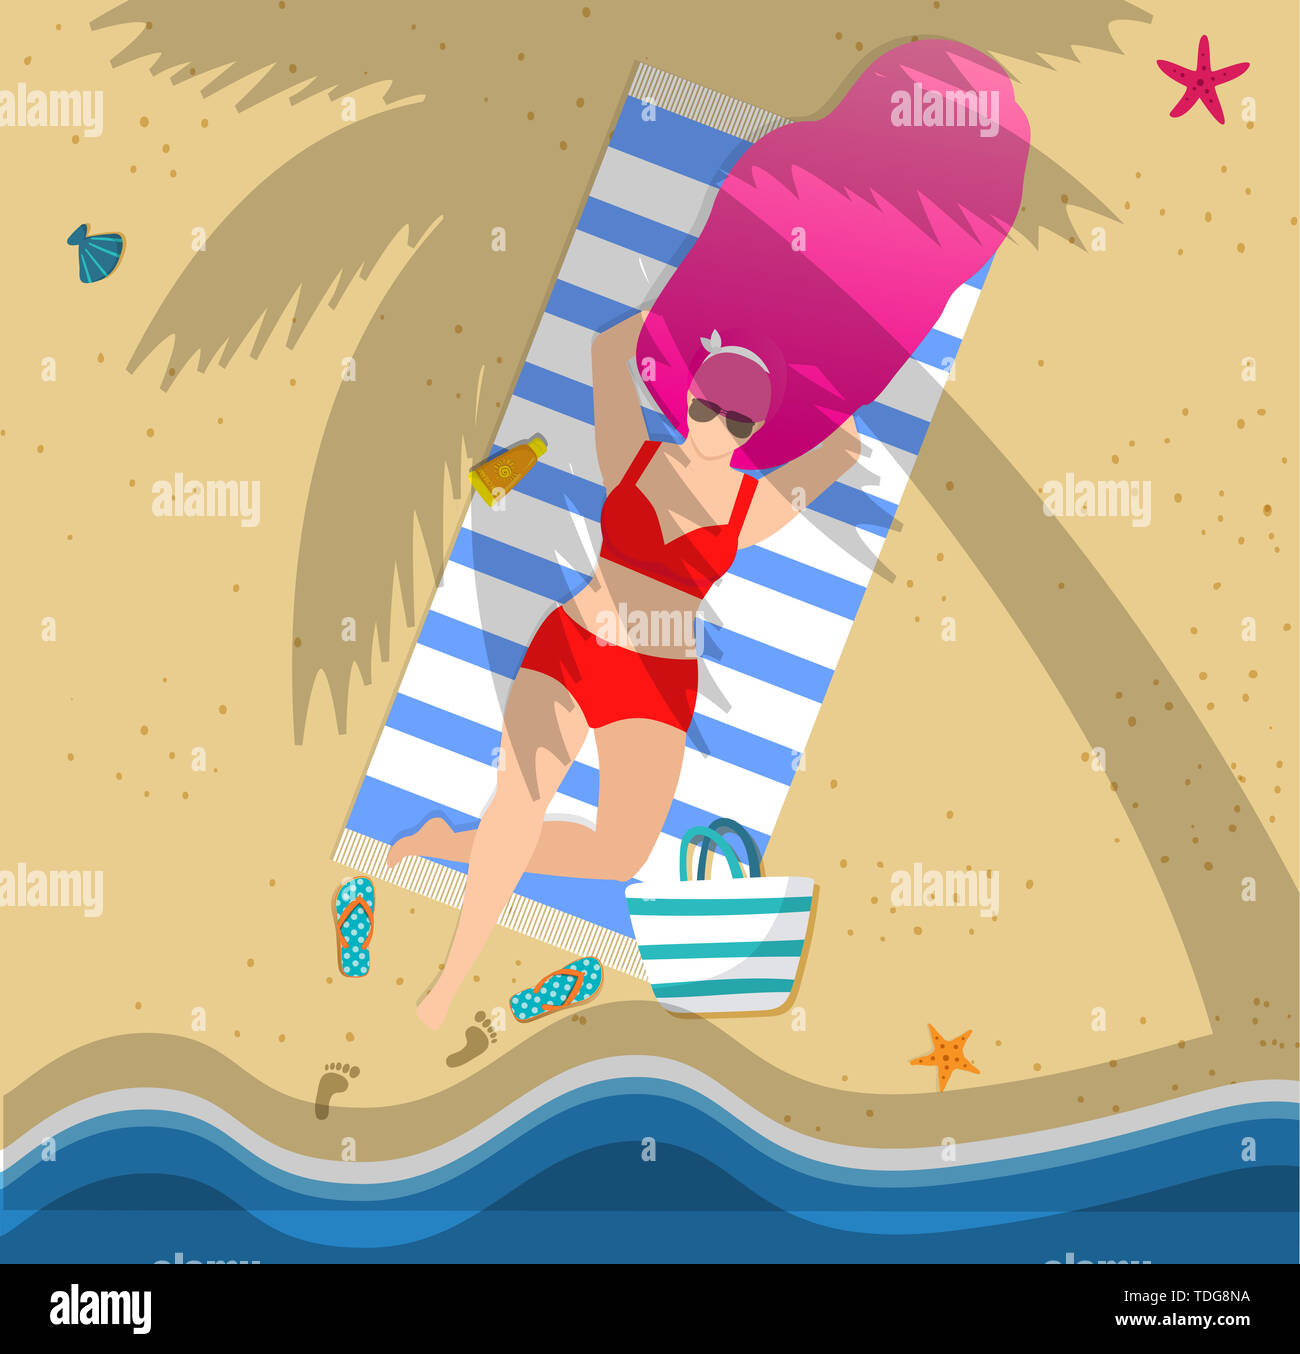 Cartoon woman in bikini hi-res stock photography and images - Alamy